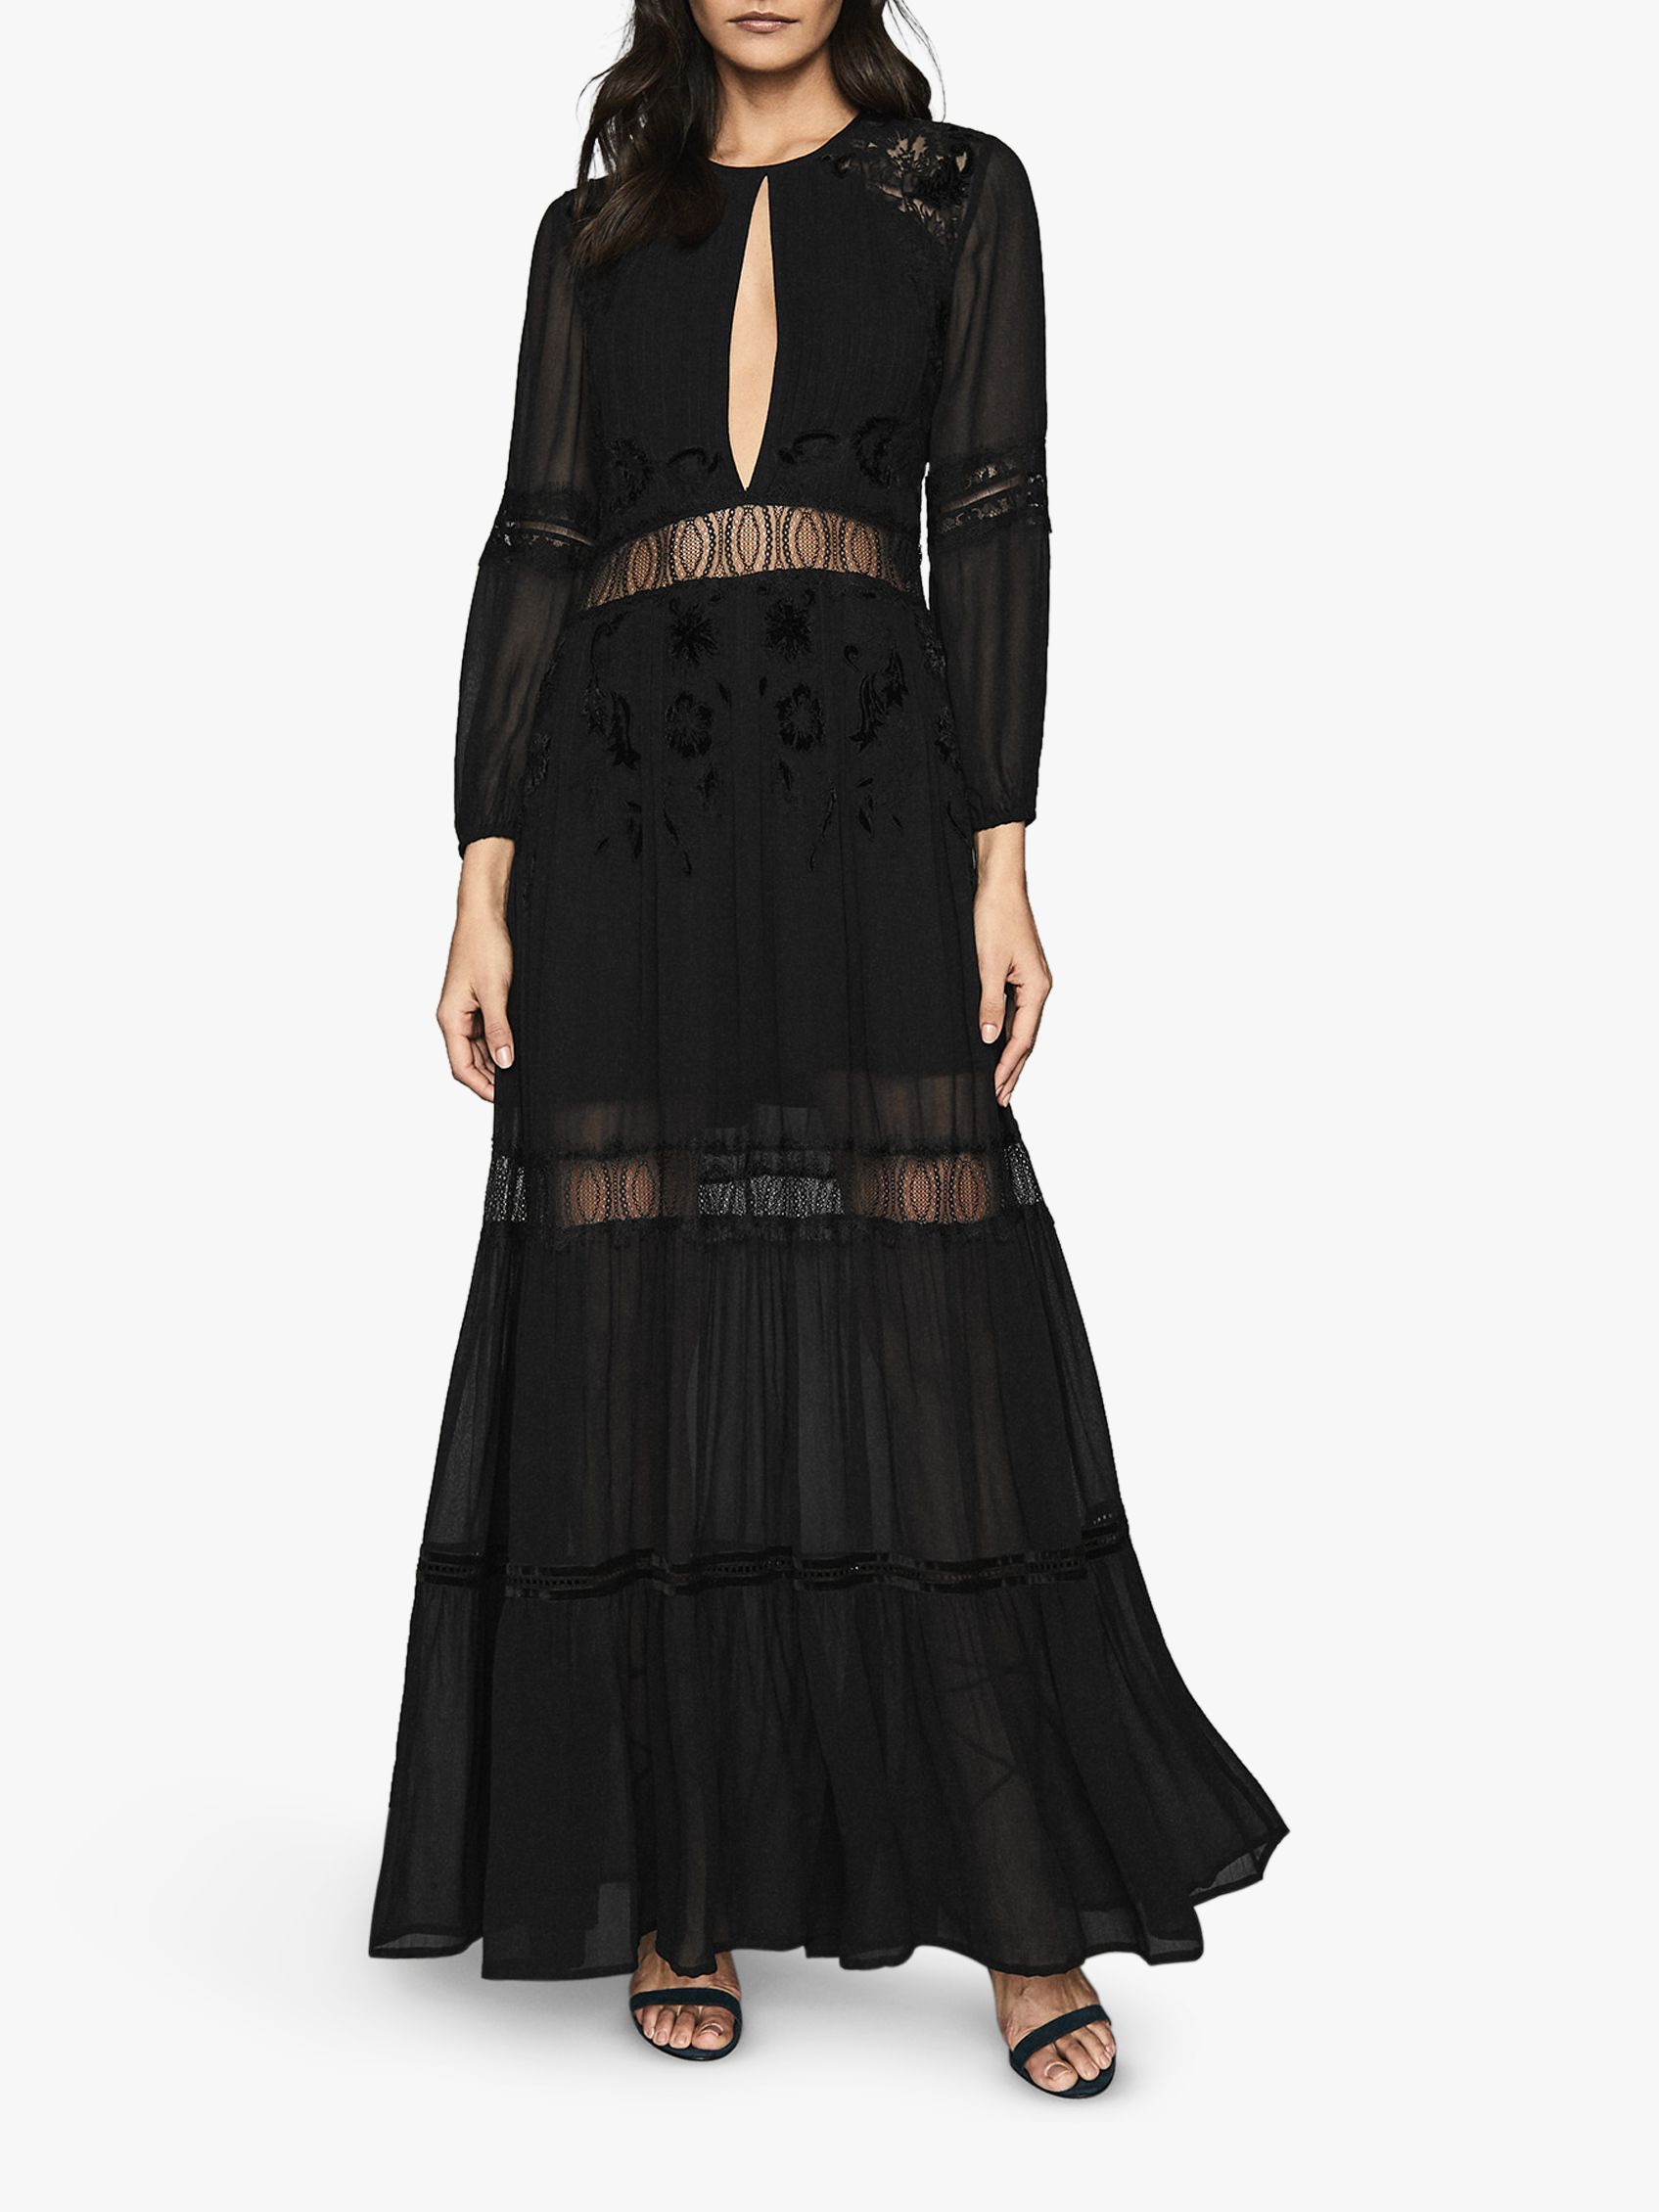 reiss black dress sale